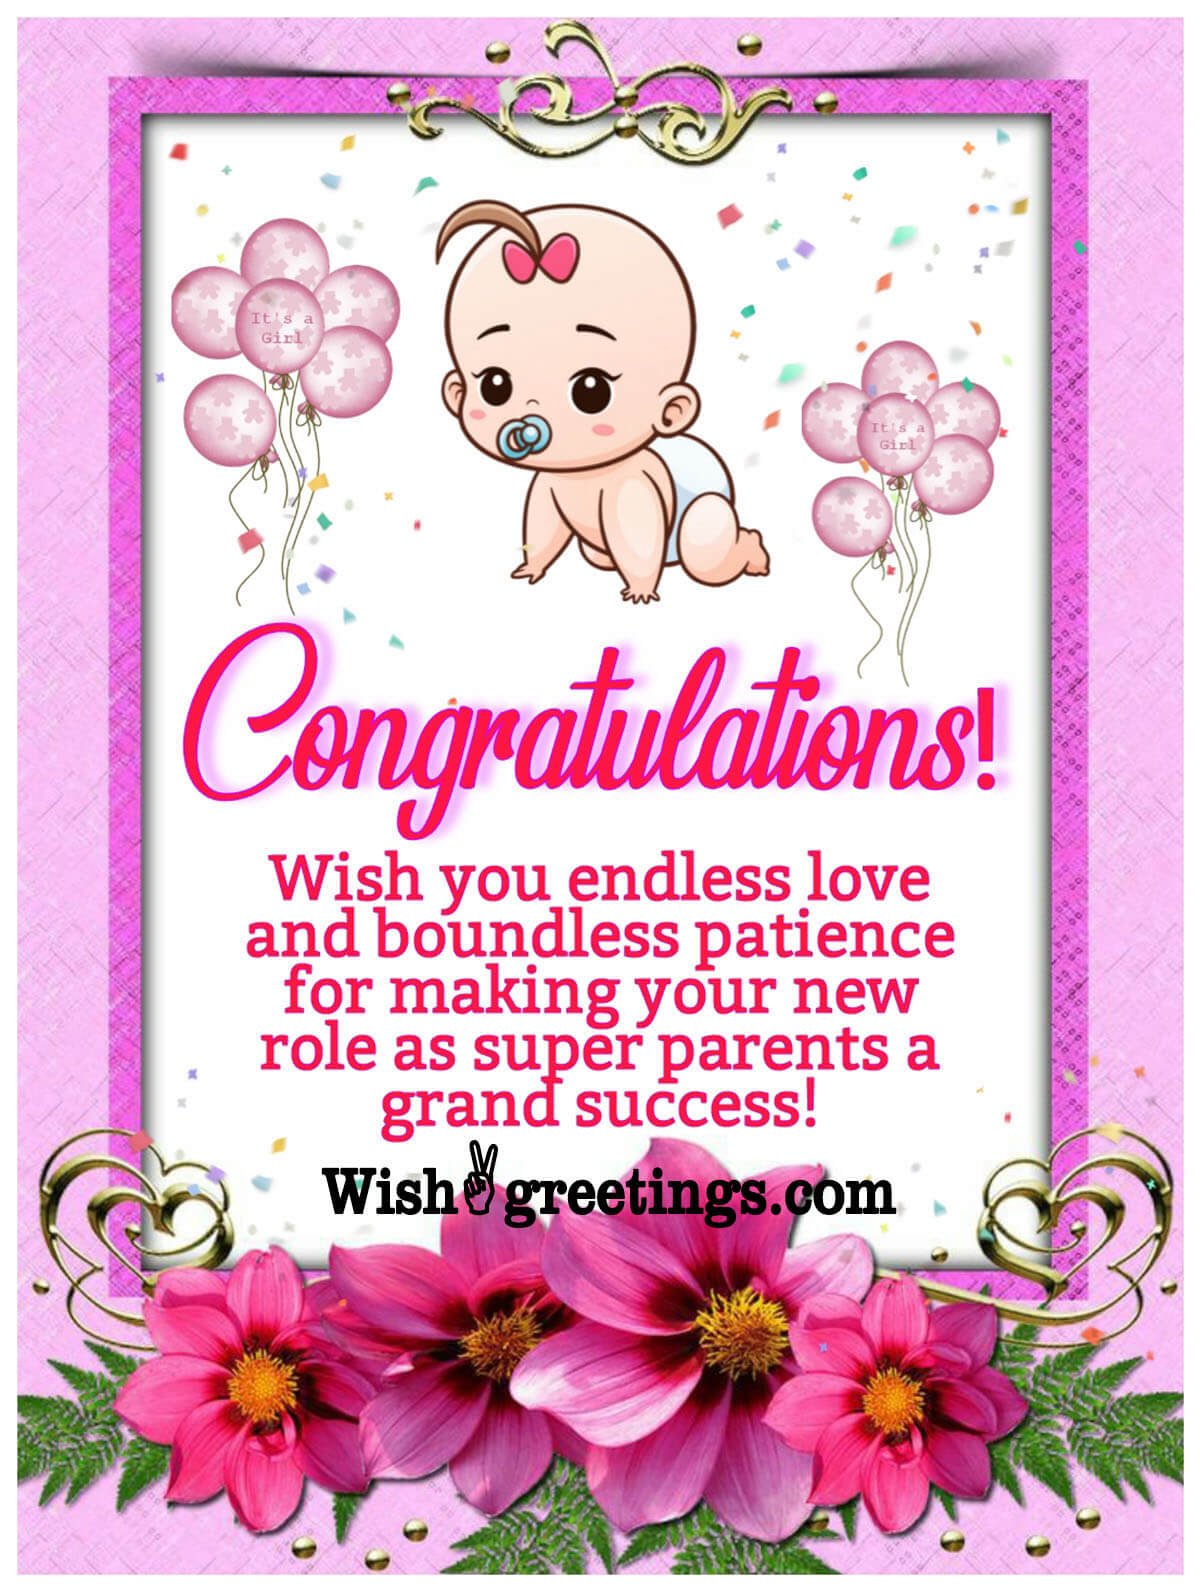 Baby Shower Congratulations Image